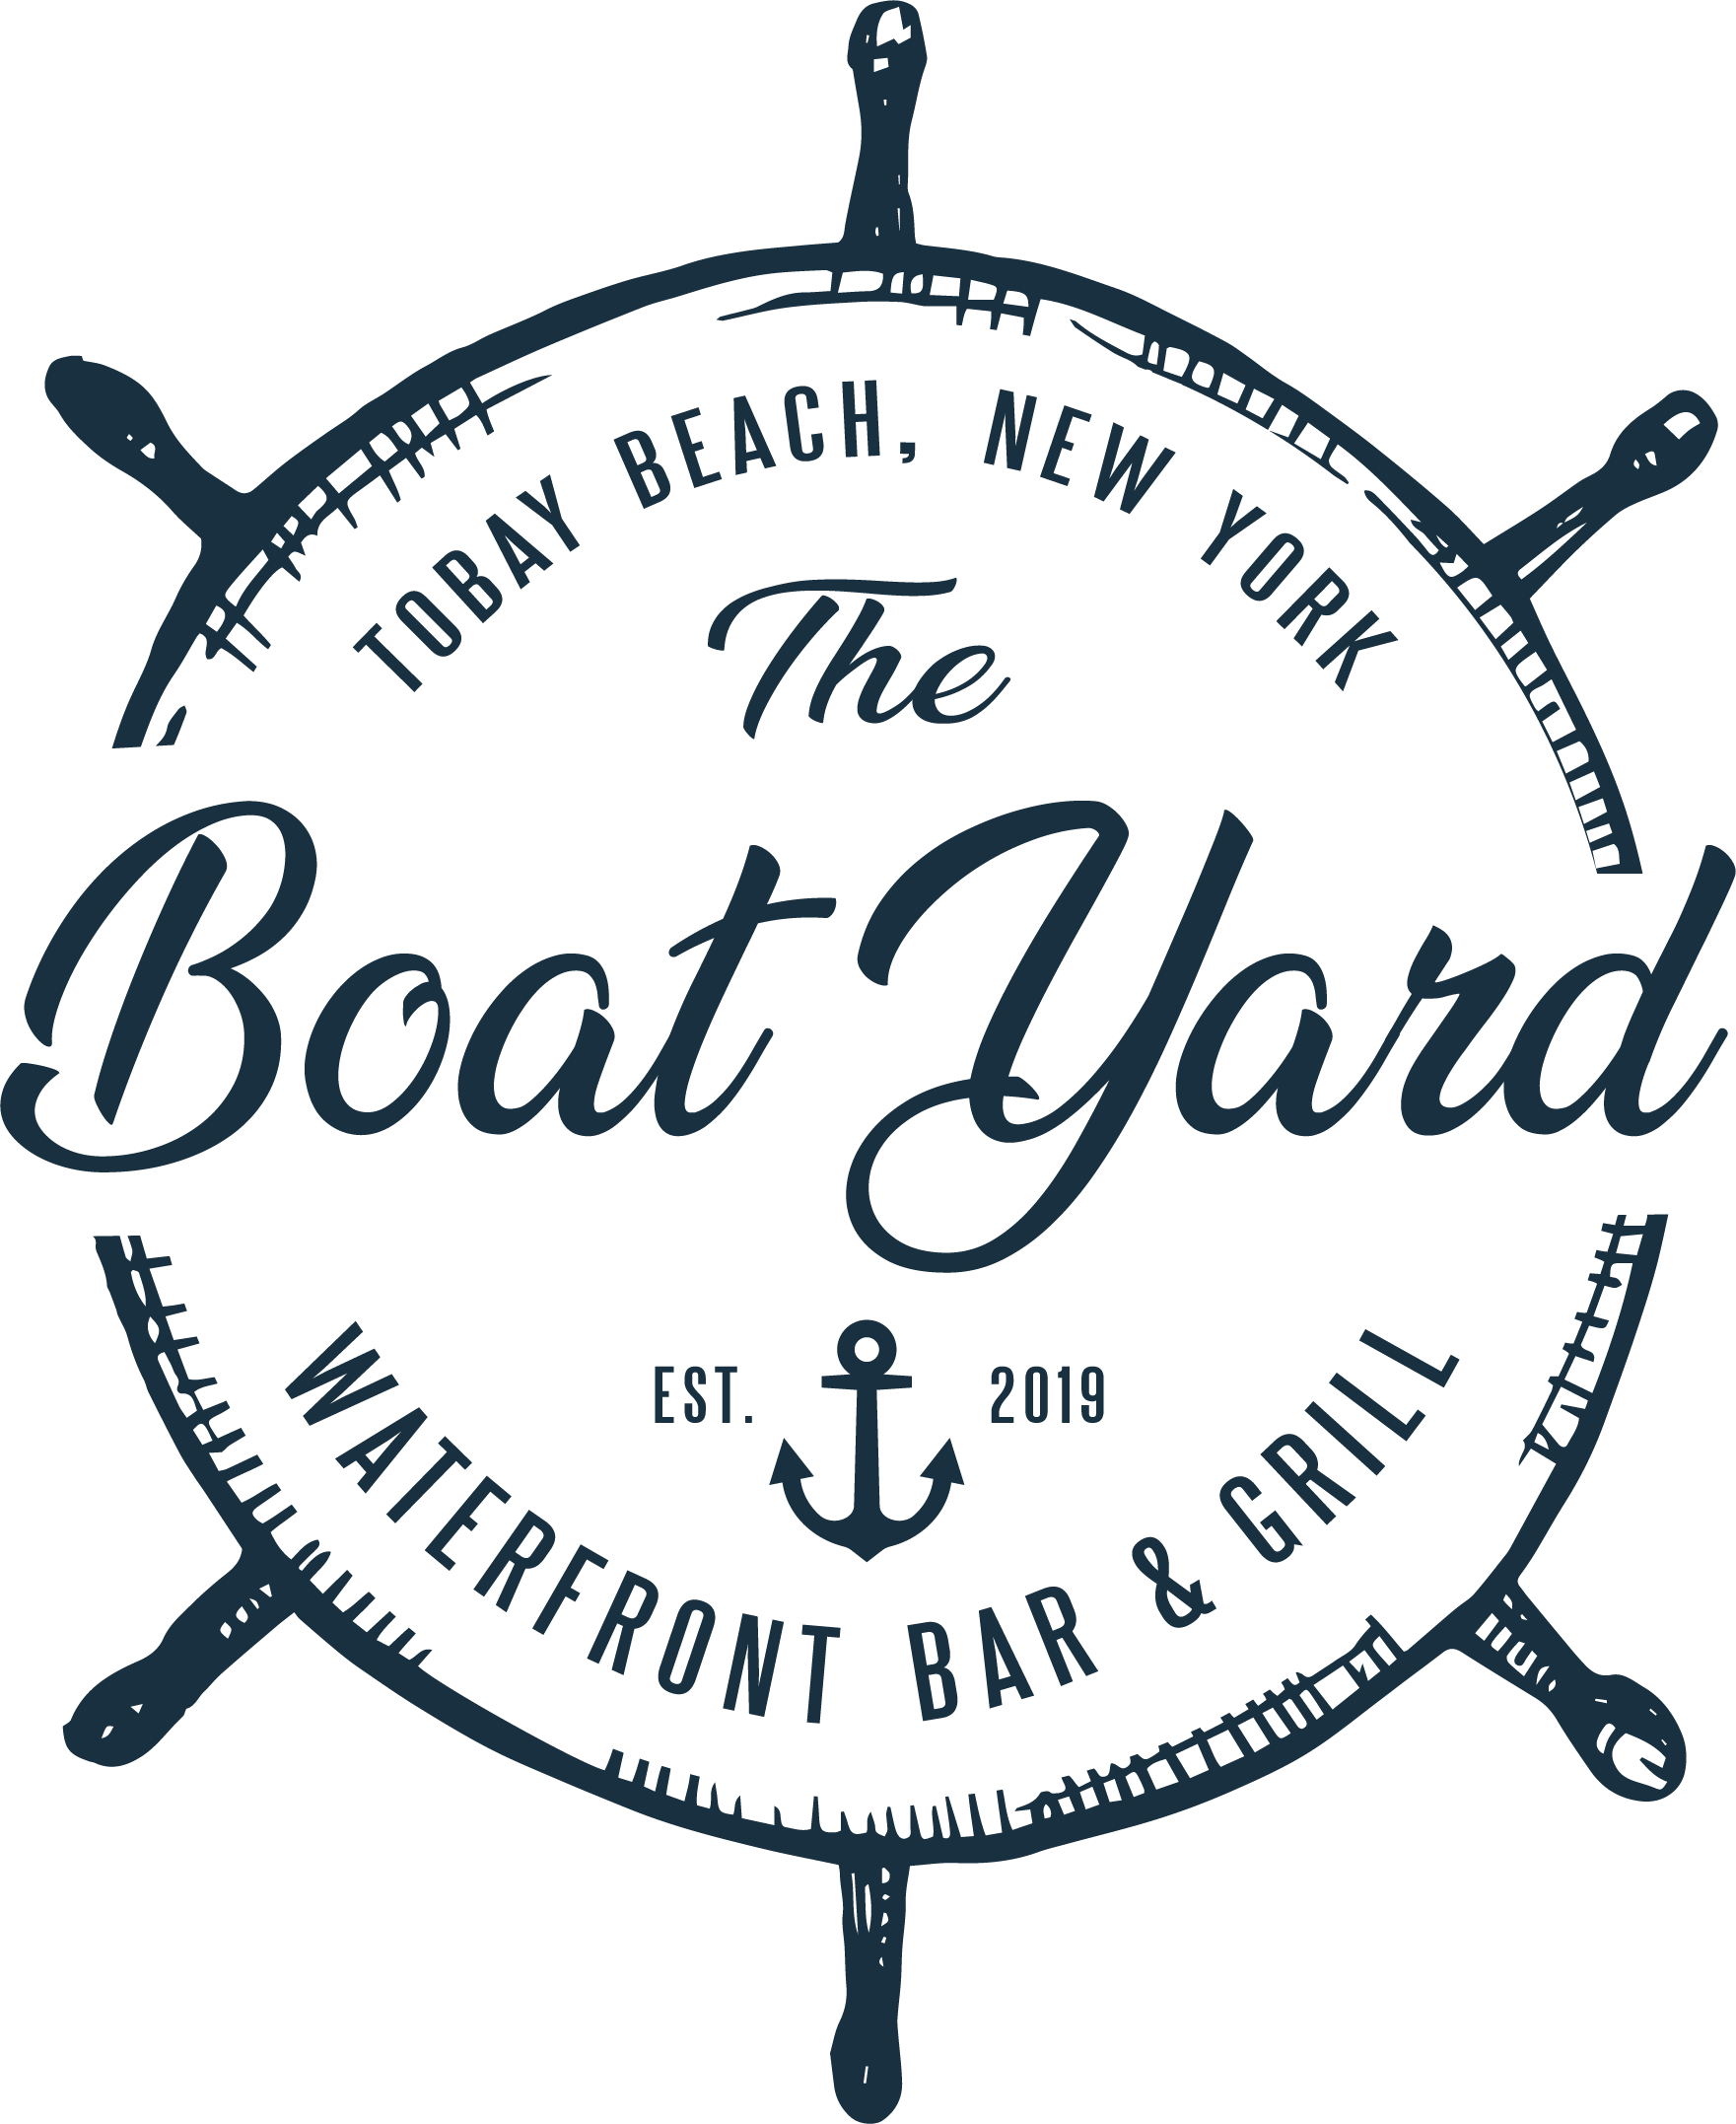 Boat Yard Logo